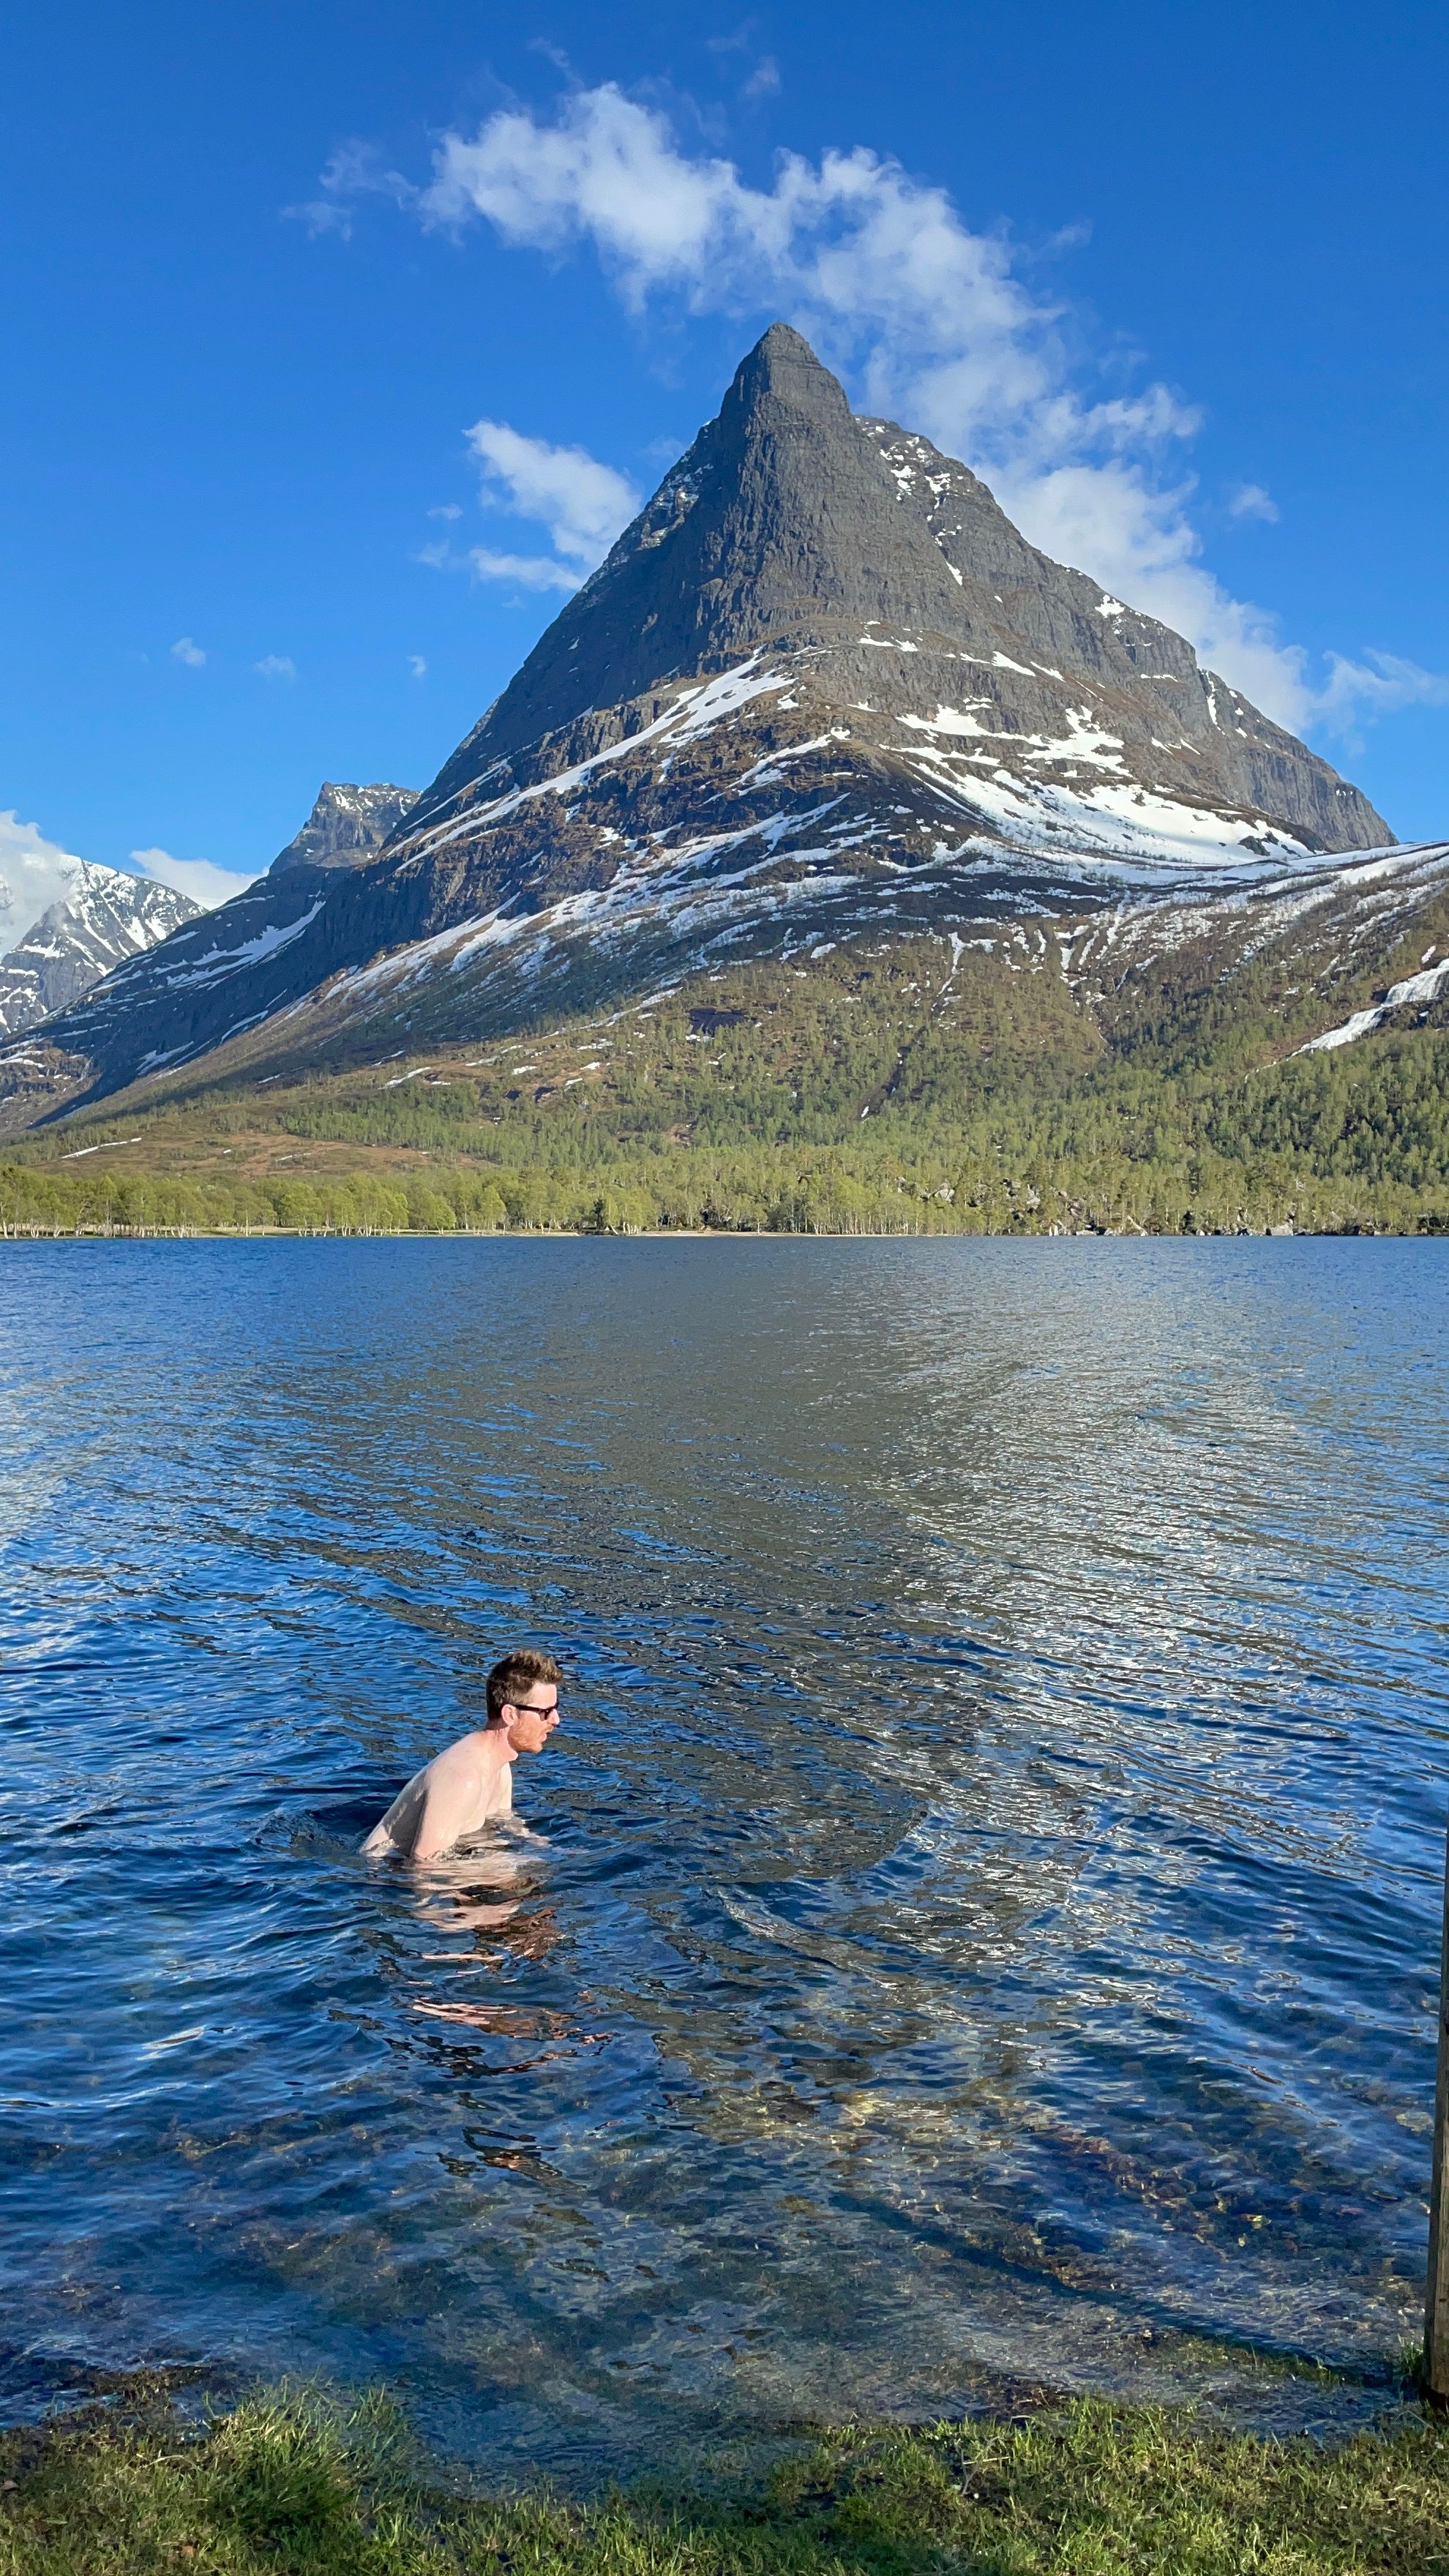 Swimming in freezing water